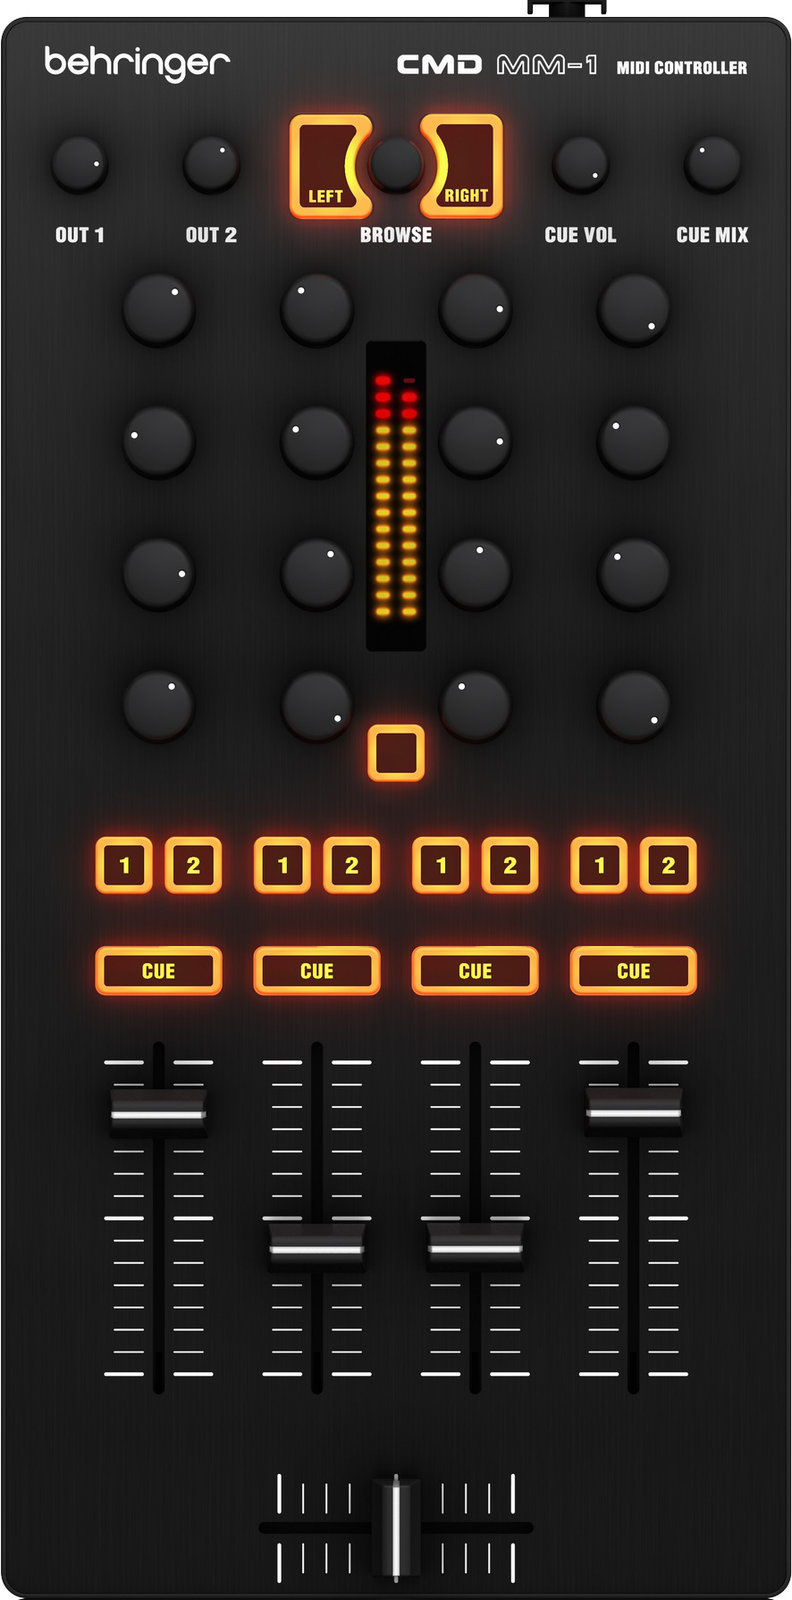 MIDI kontroler, MIDI ovladač Behringer CMD MM-1